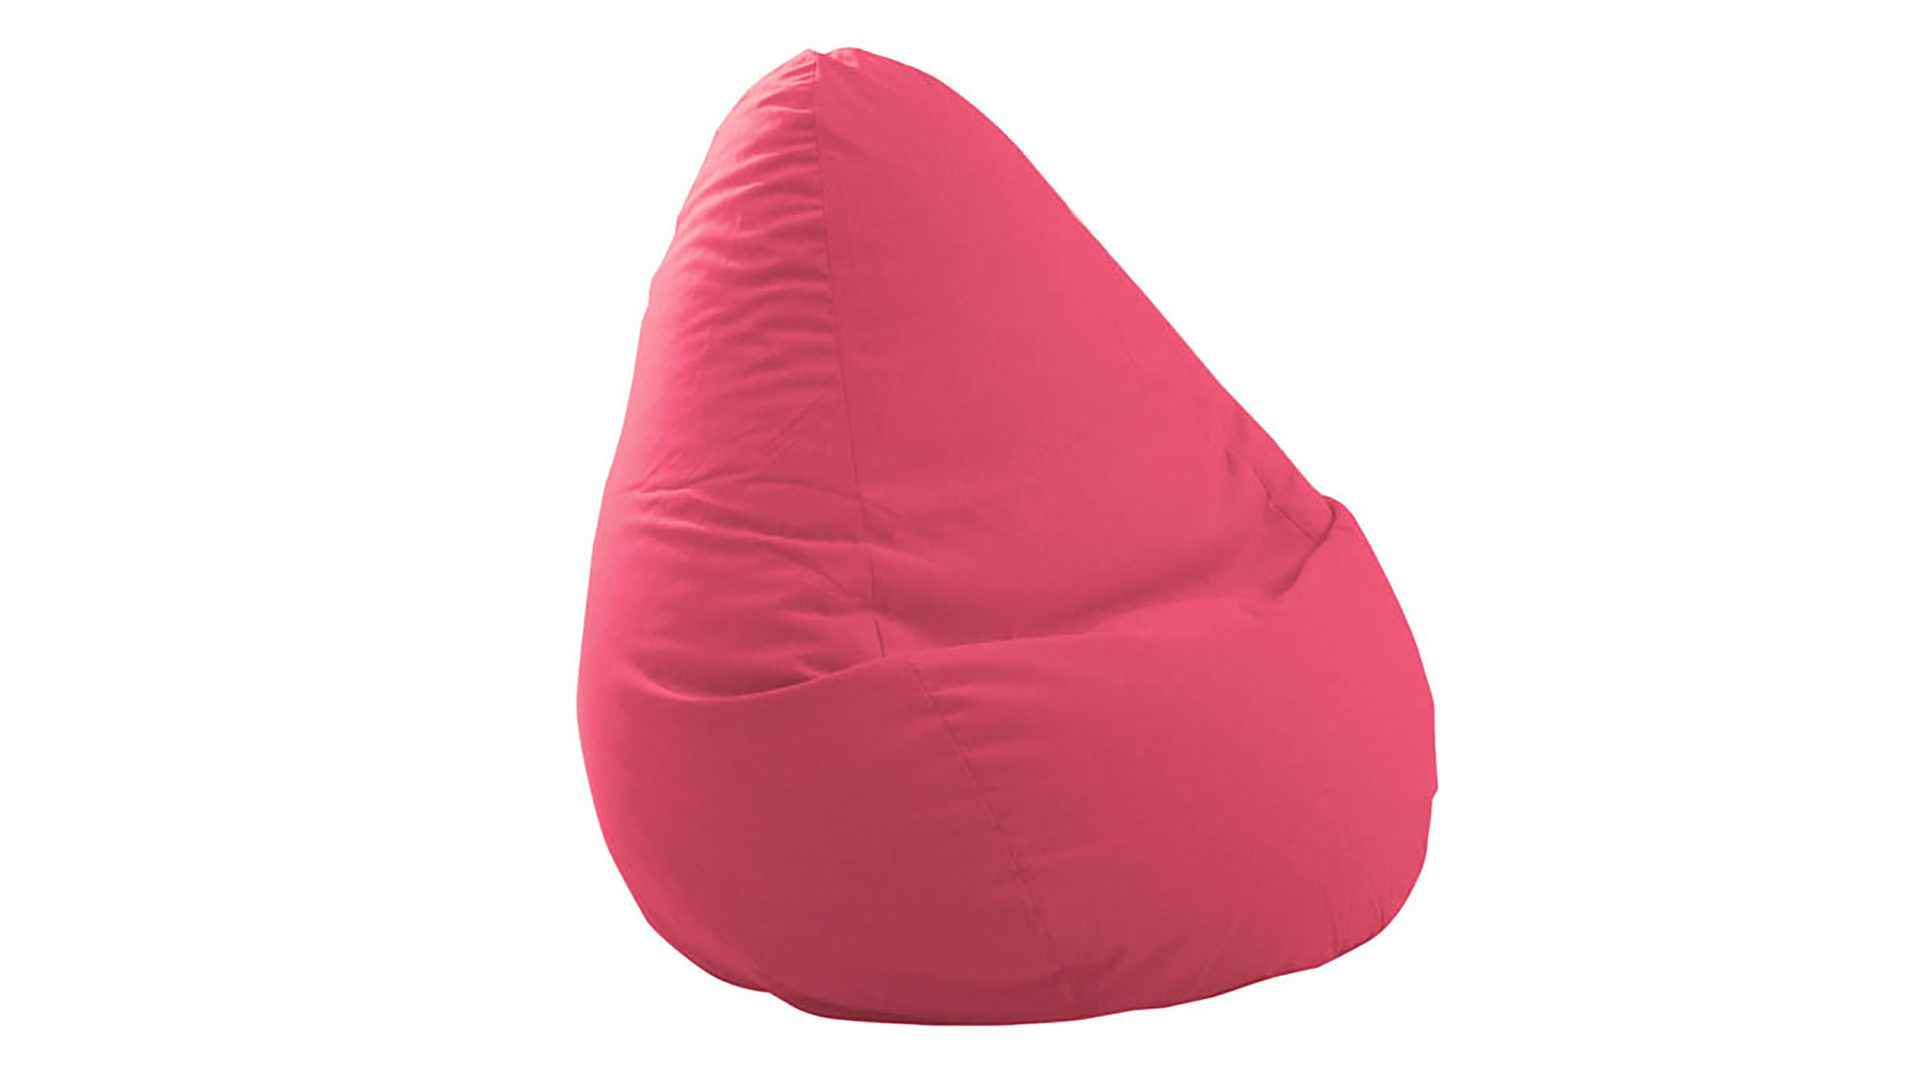 Standard-Sitzsack Magma sitting point aus Stoff in Pink SITTING POINT Sitzsack Easy XL - Sitzmöbel pinker Mikrofaserbezug - ca. 220 Liter